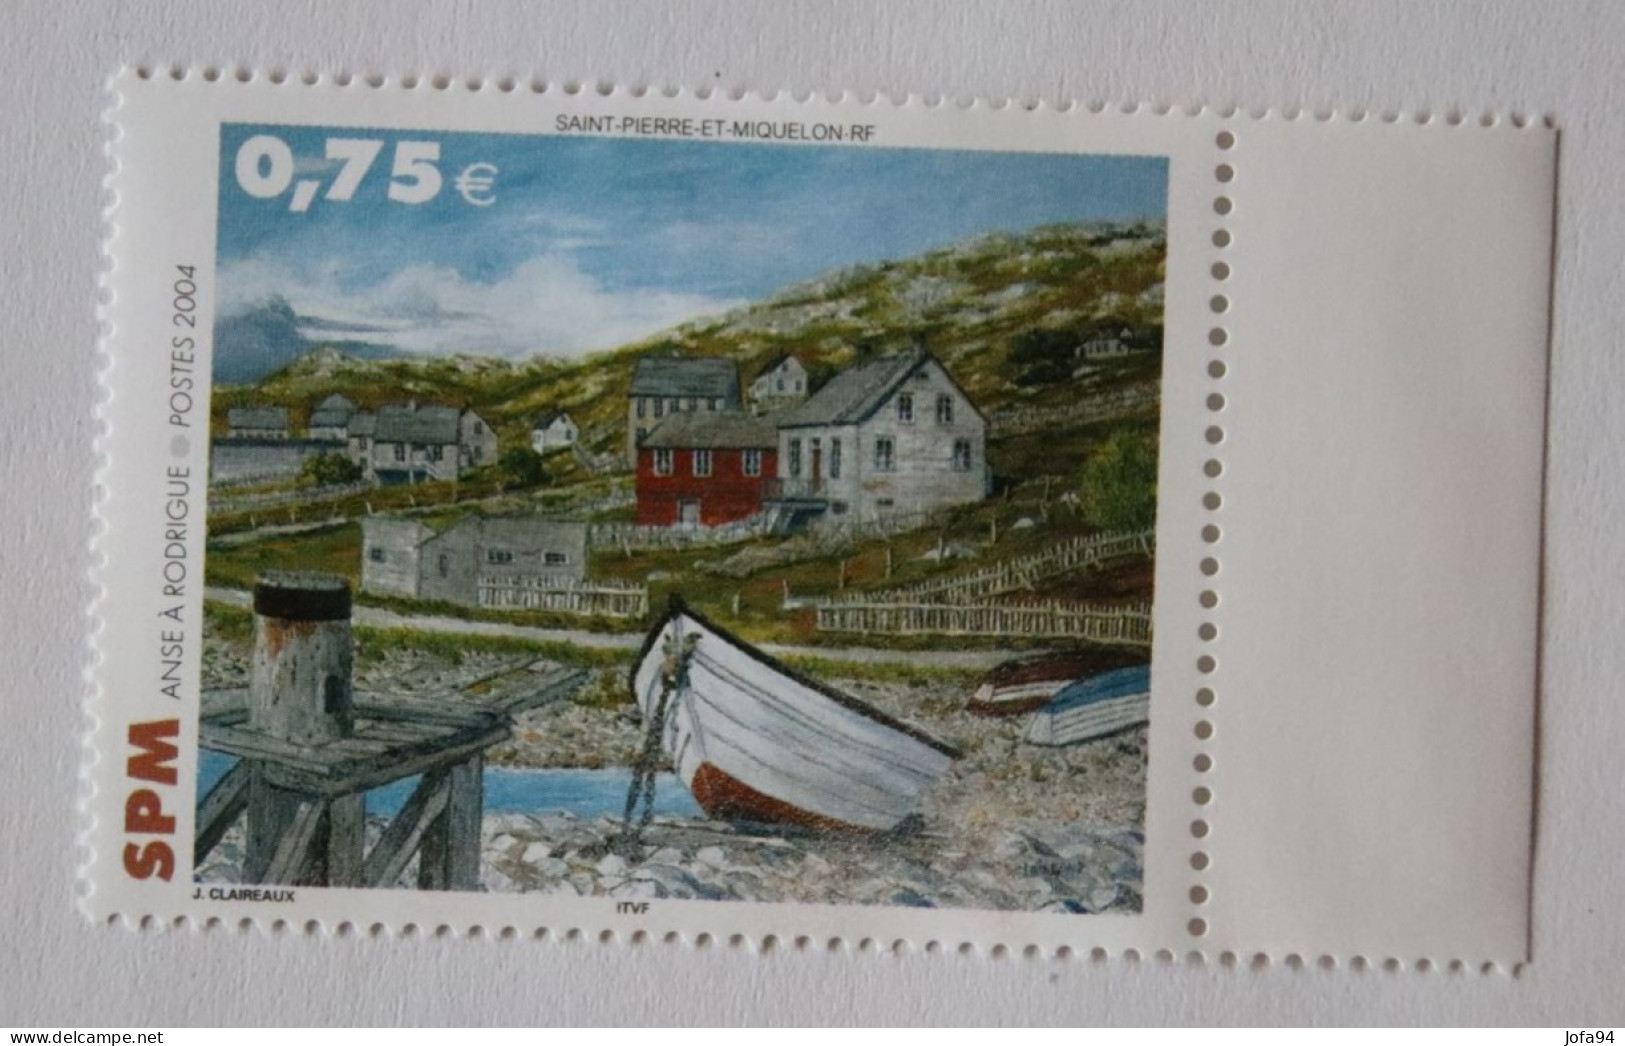 SPM 2004 Peinture Anse à Rodrigue YT 811   Neuf Imperf - Unused Stamps